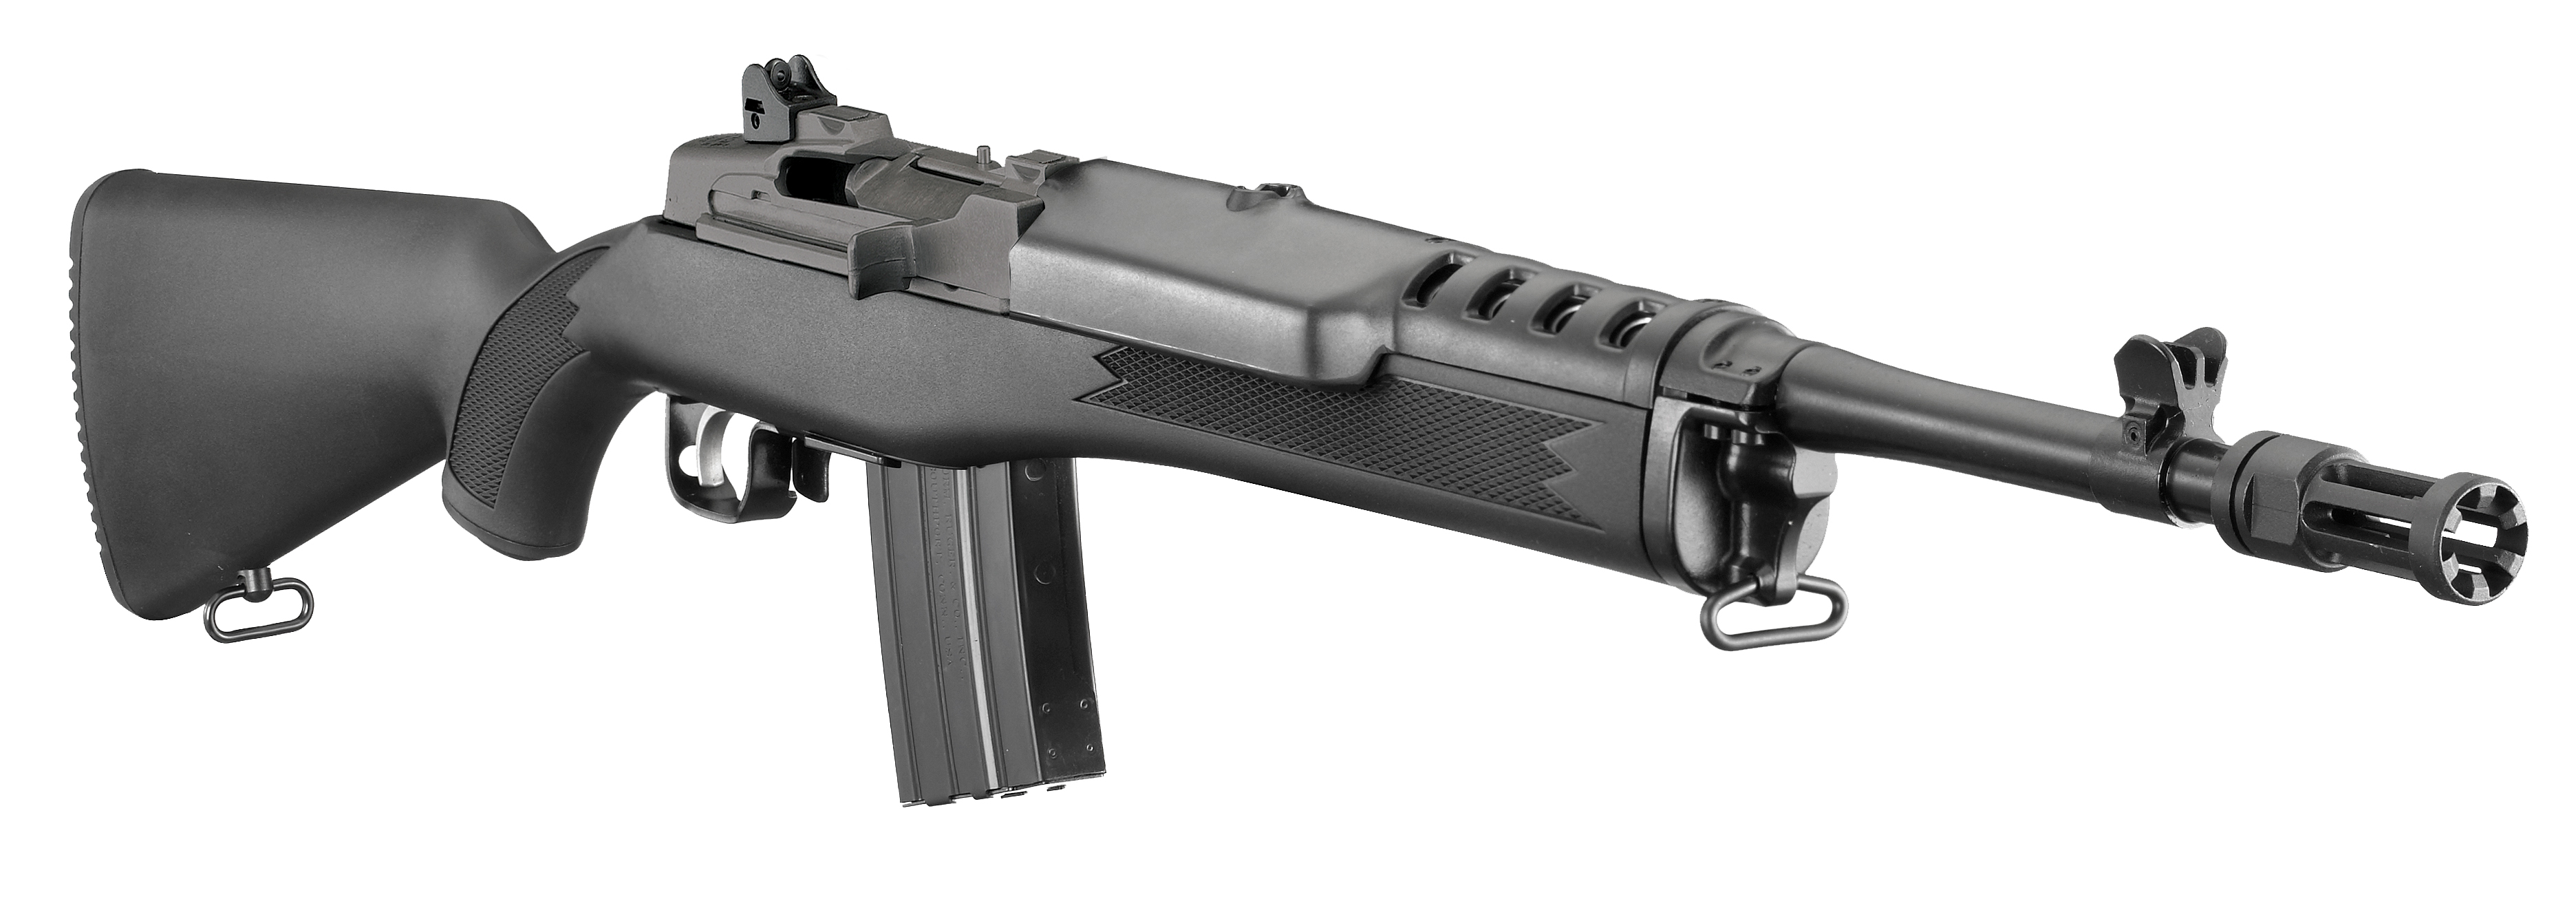 MPICZ Ruger Mini 14 Tactical Rifle 223 Rem 